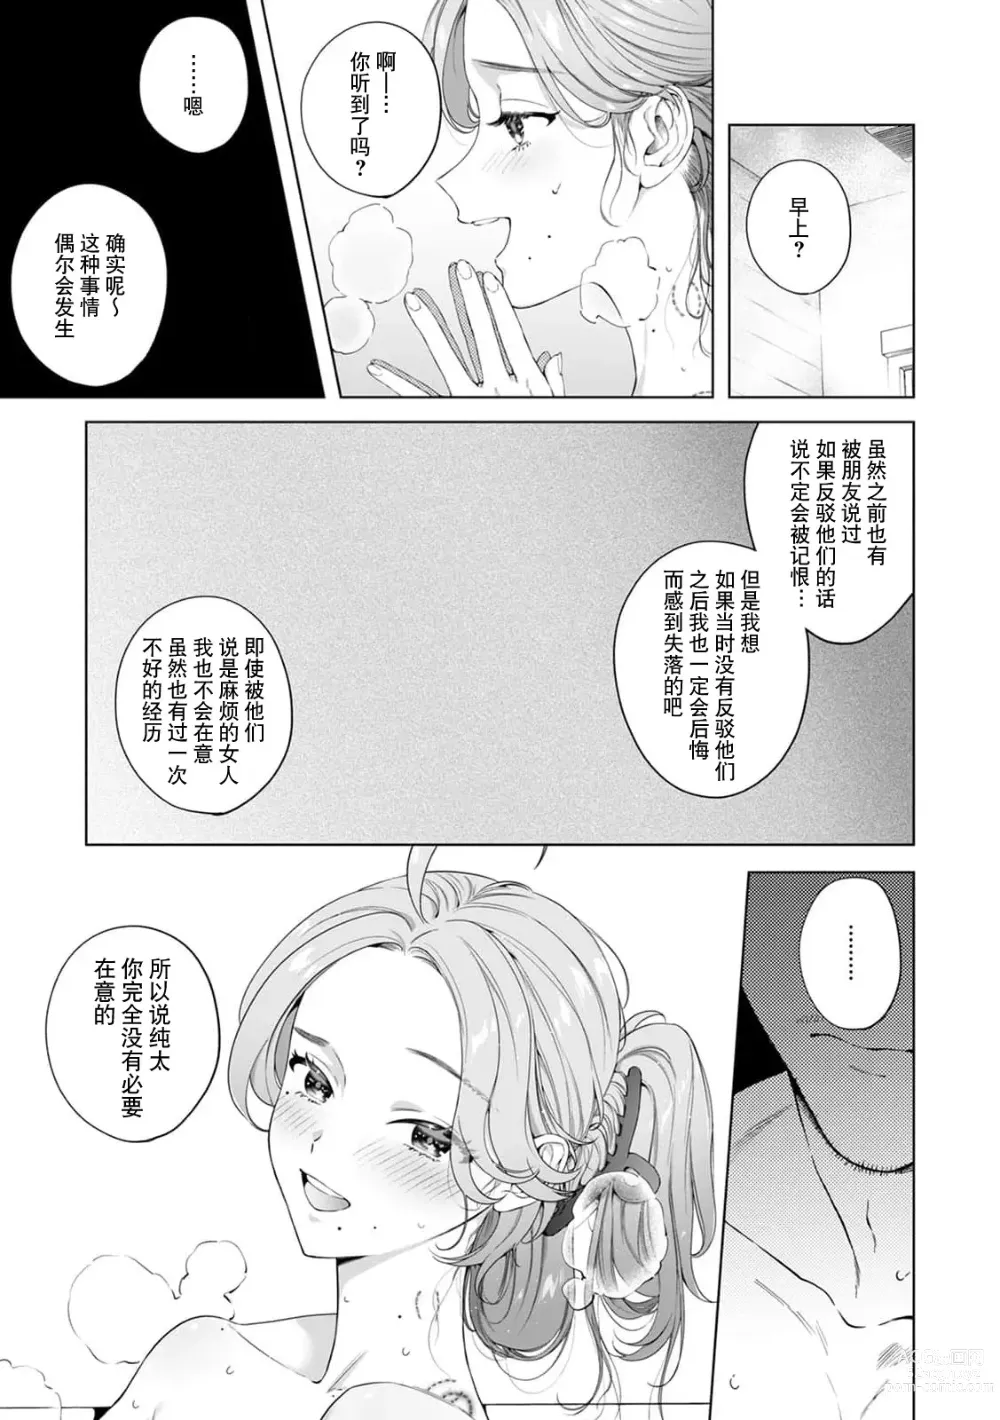 Page 157 of manga 驯幼染认真起来是非常糟糕的溺爱  Ch. 1-6